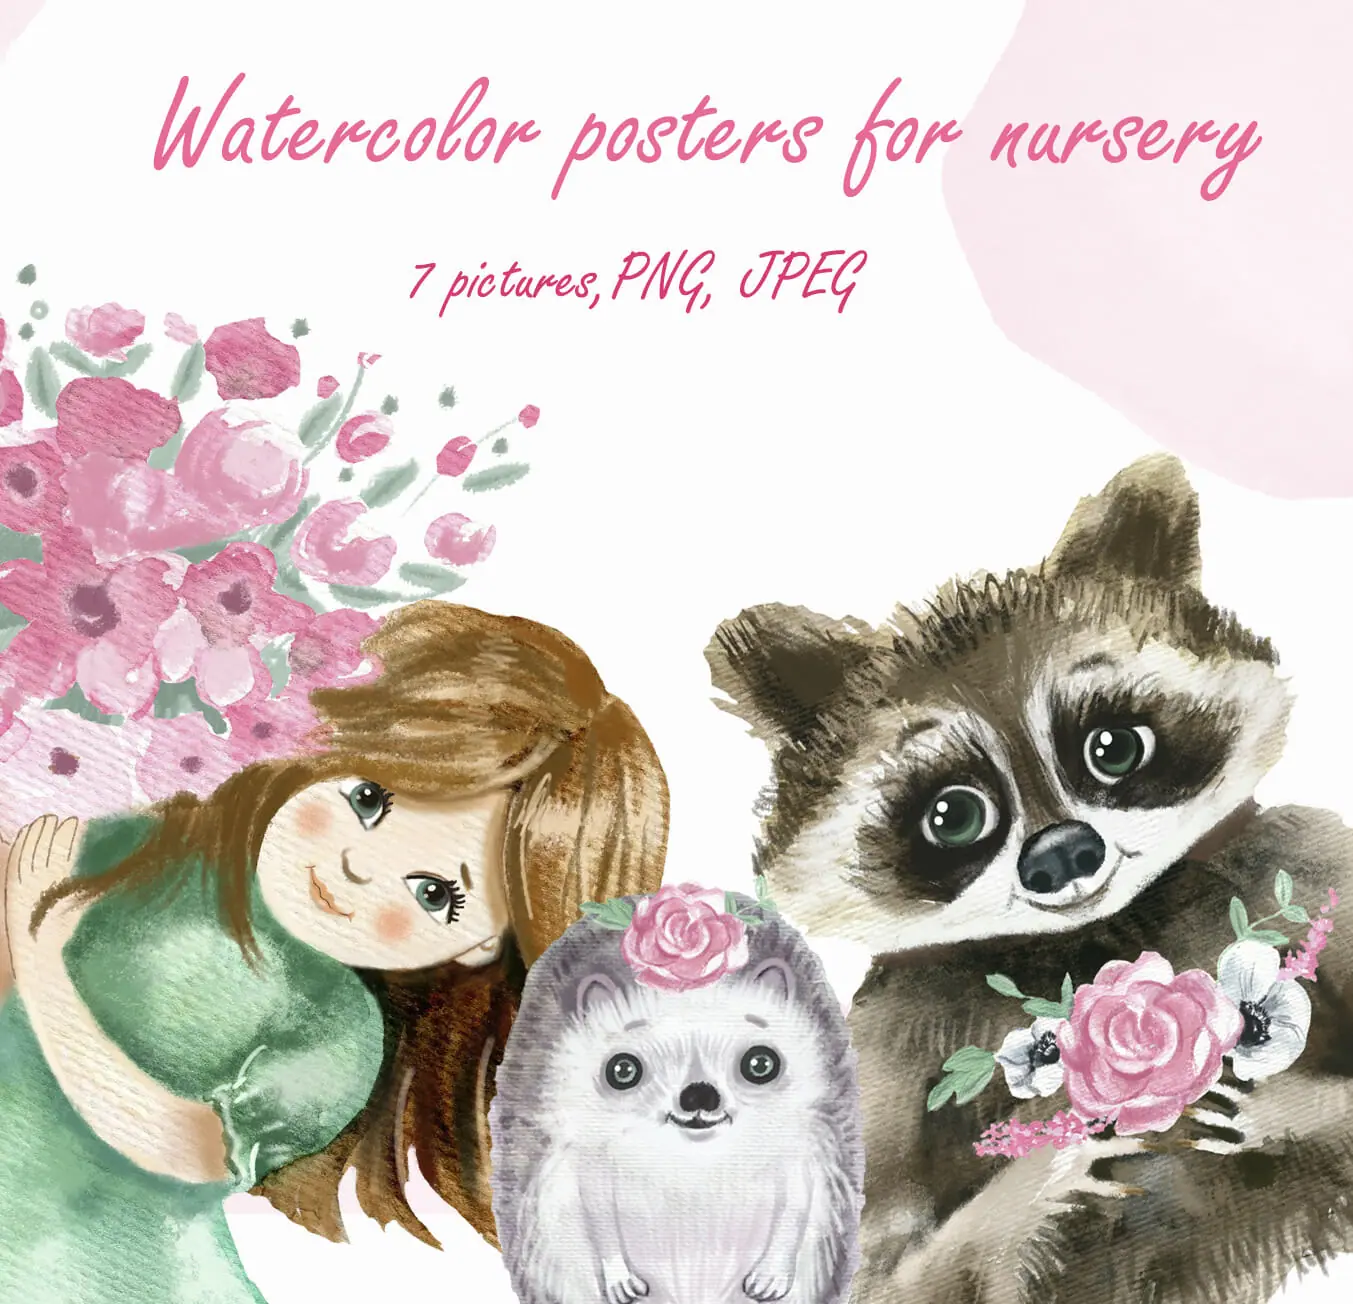 Watercolor posters for nursery, cute girl, raccoon, bunny